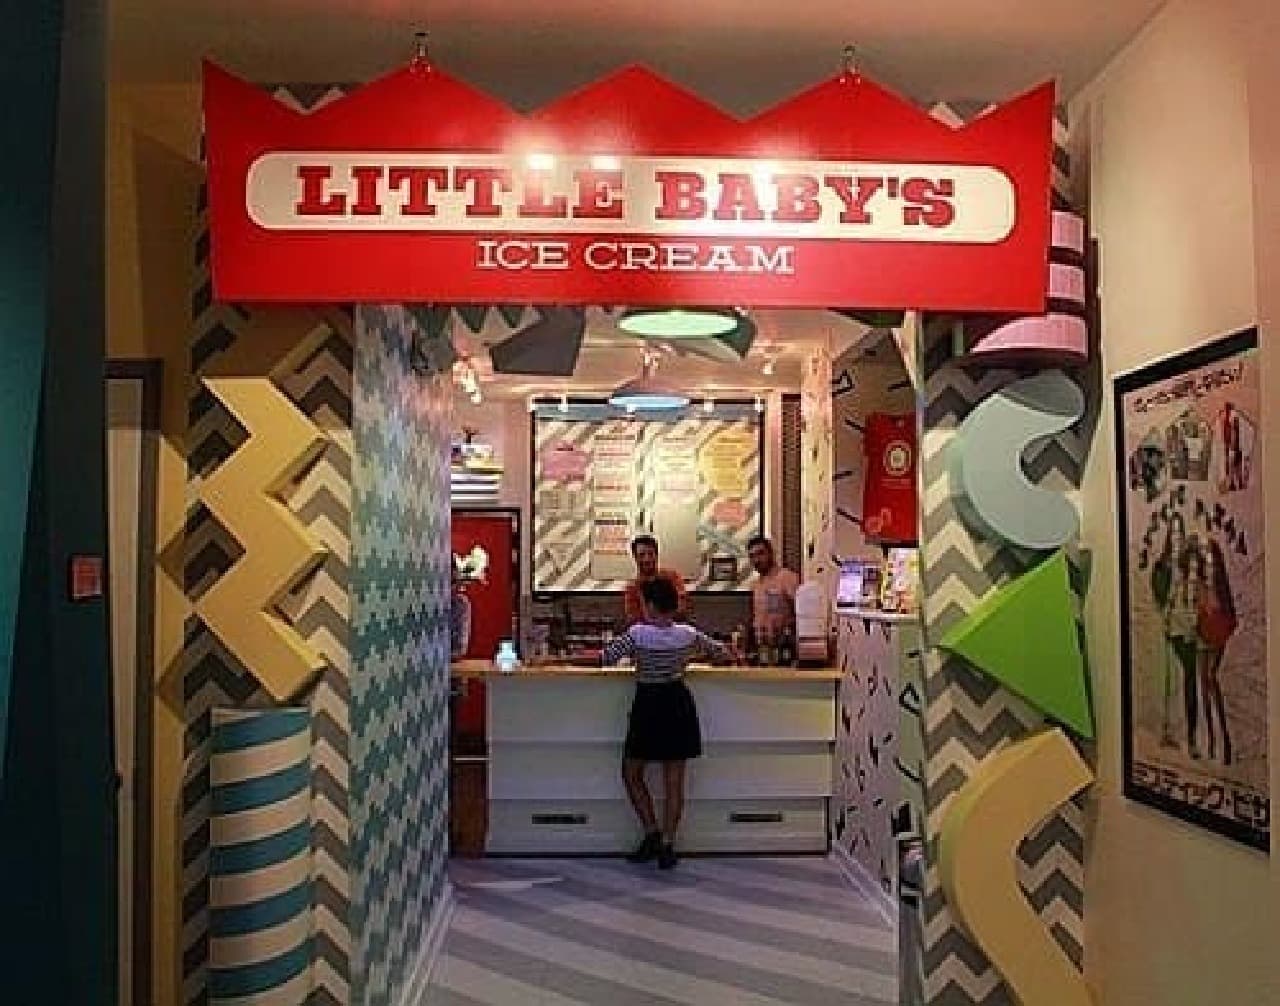 Ice cream shop "Little Baby's" next to "Pizza Brain"